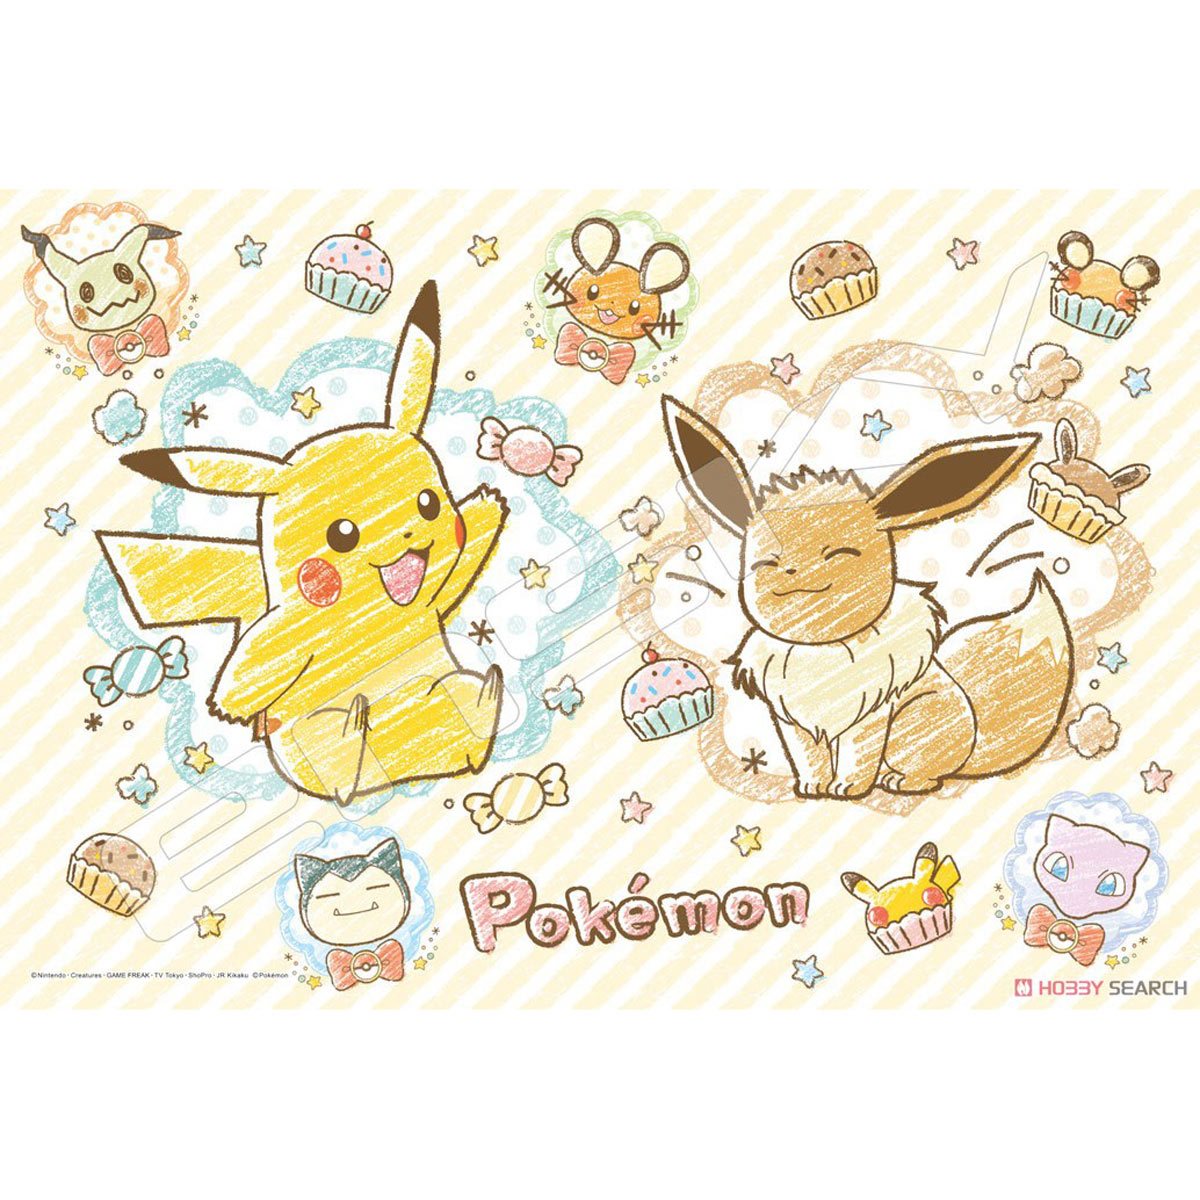 Pokemon 108pcs Jigsaw Puzzle : Pikachu & Eevee – Hello Discount Store